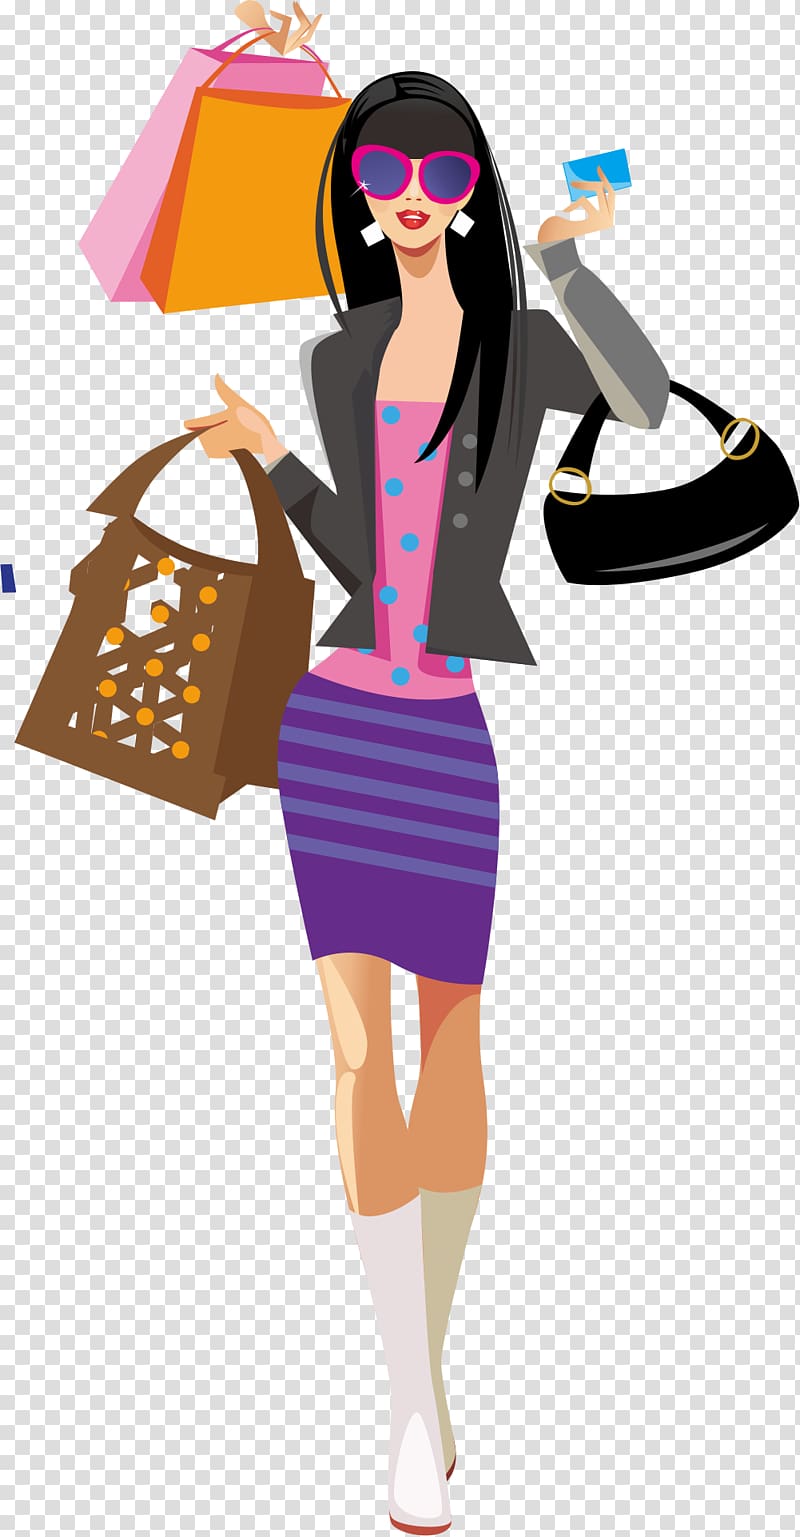 Woman Carrying Bag Illustration Shopping Fashion Cartoon Girl